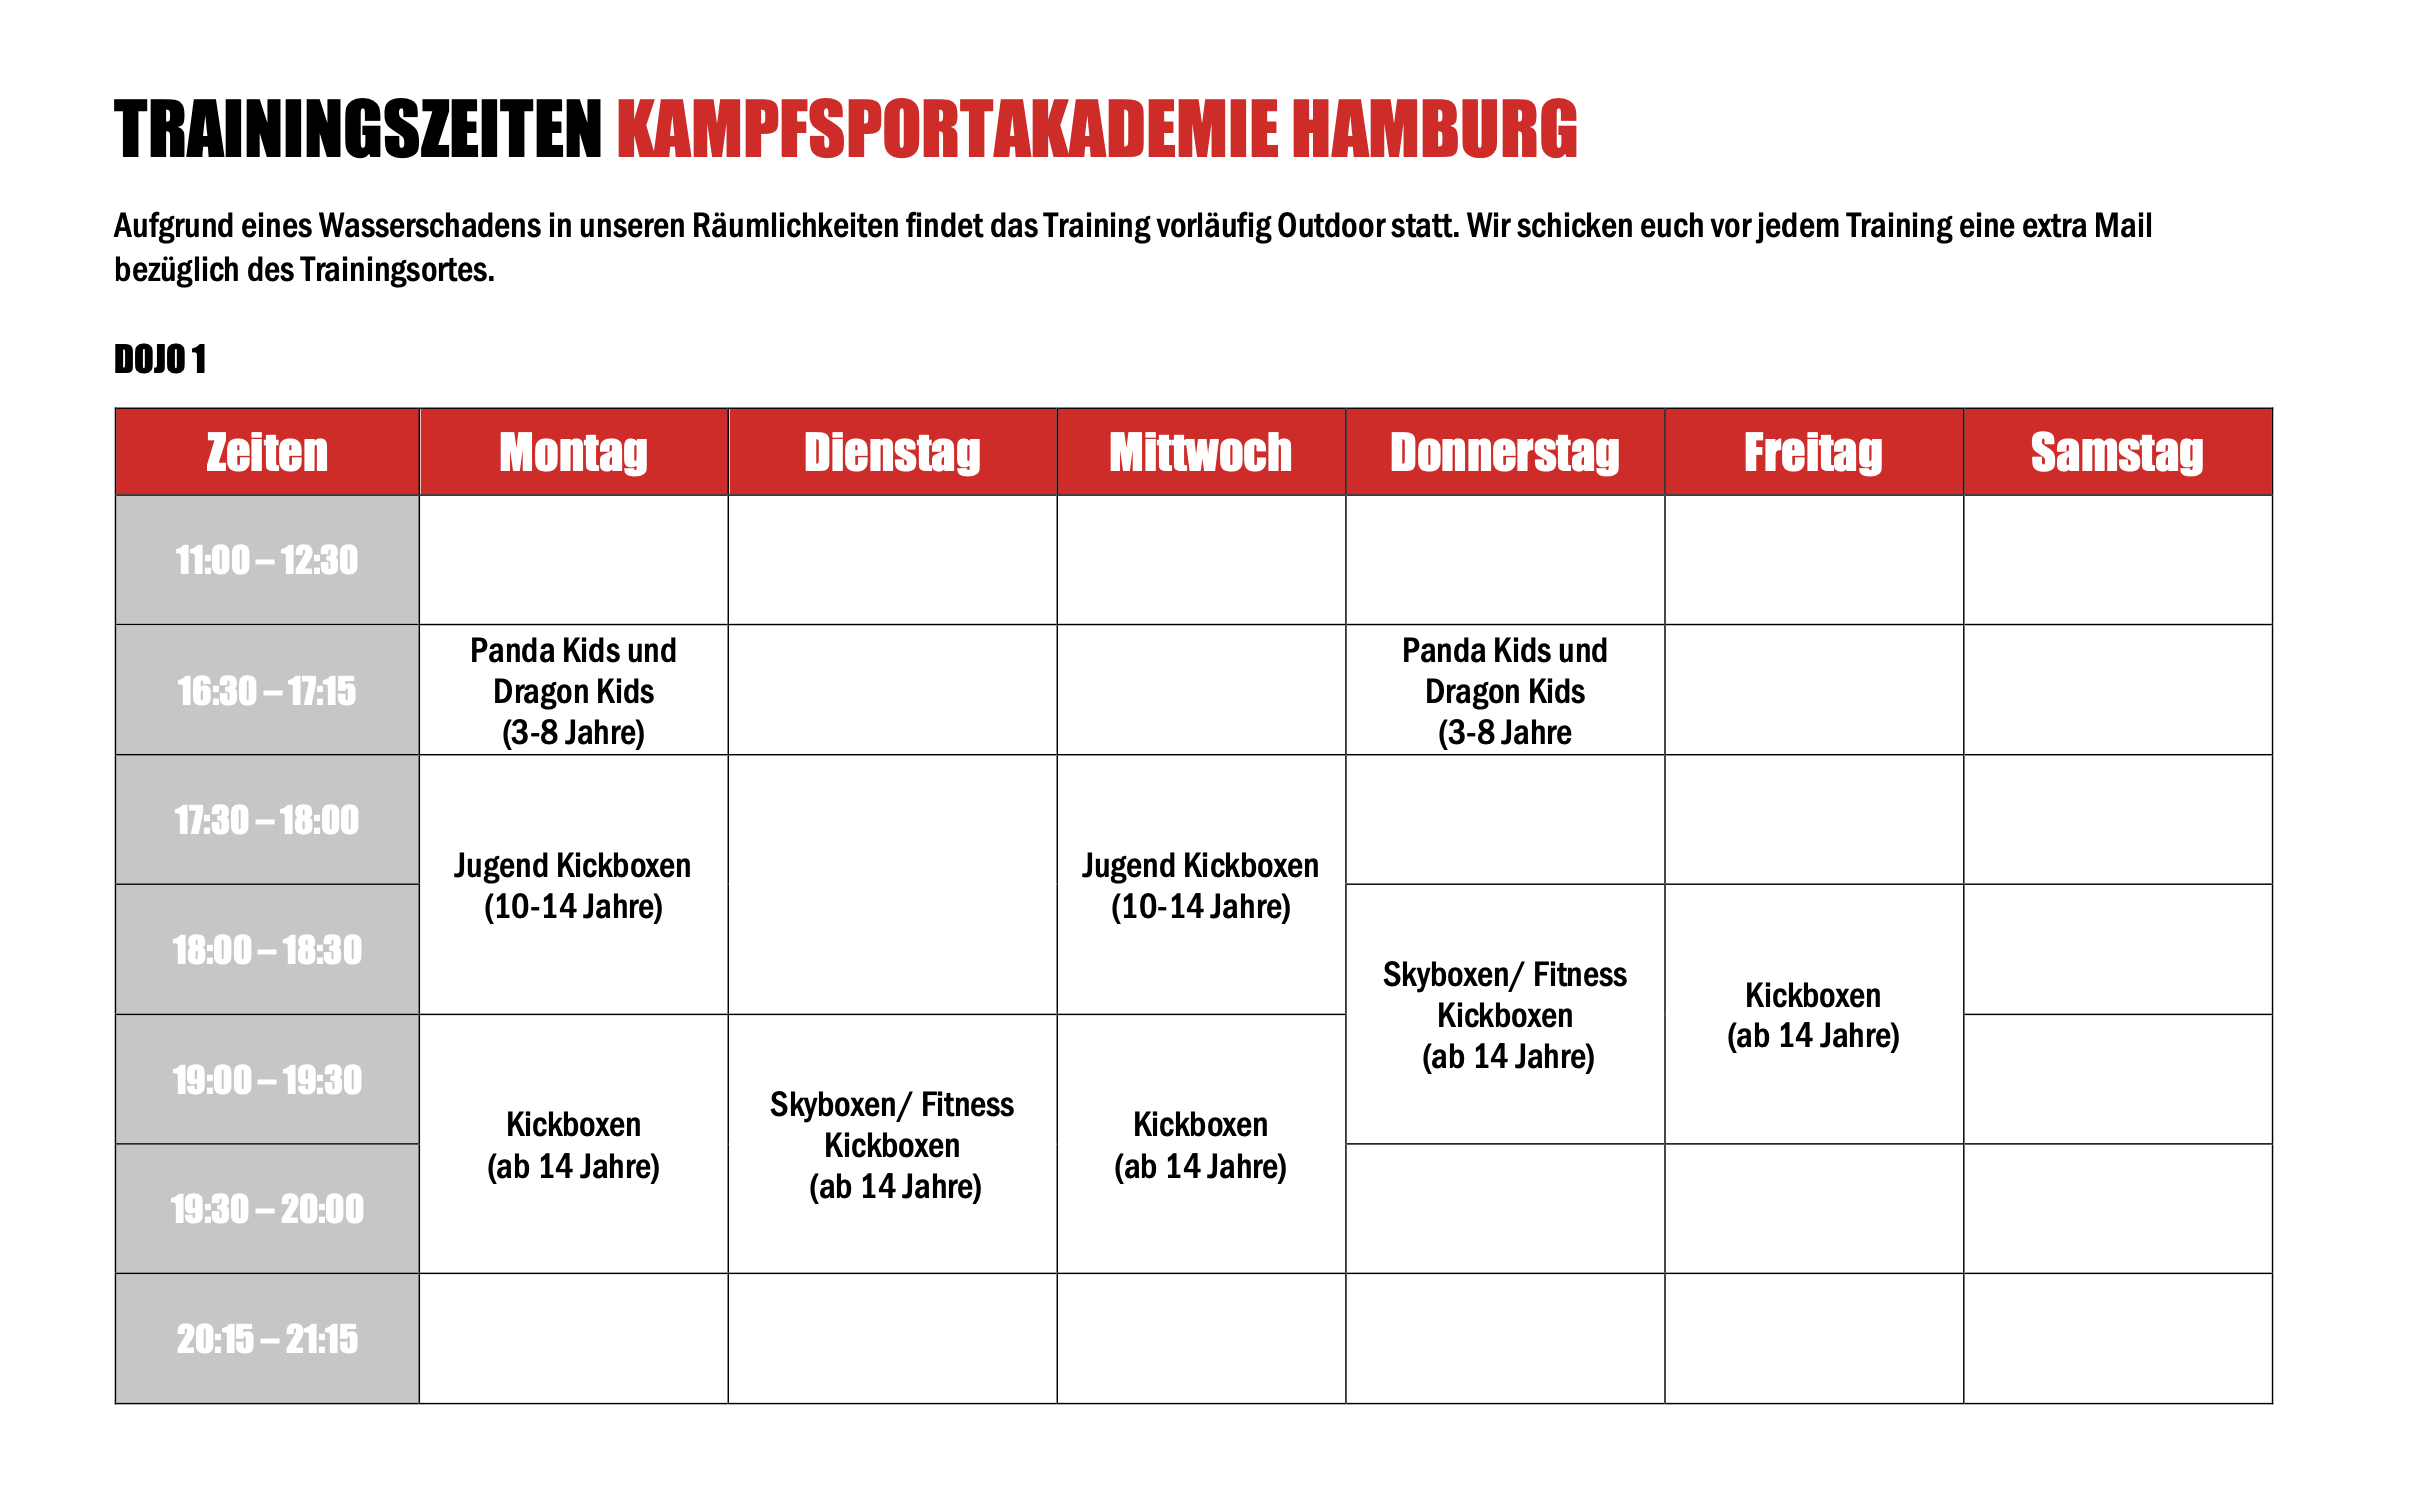 Trainingszeiten in Hamburg